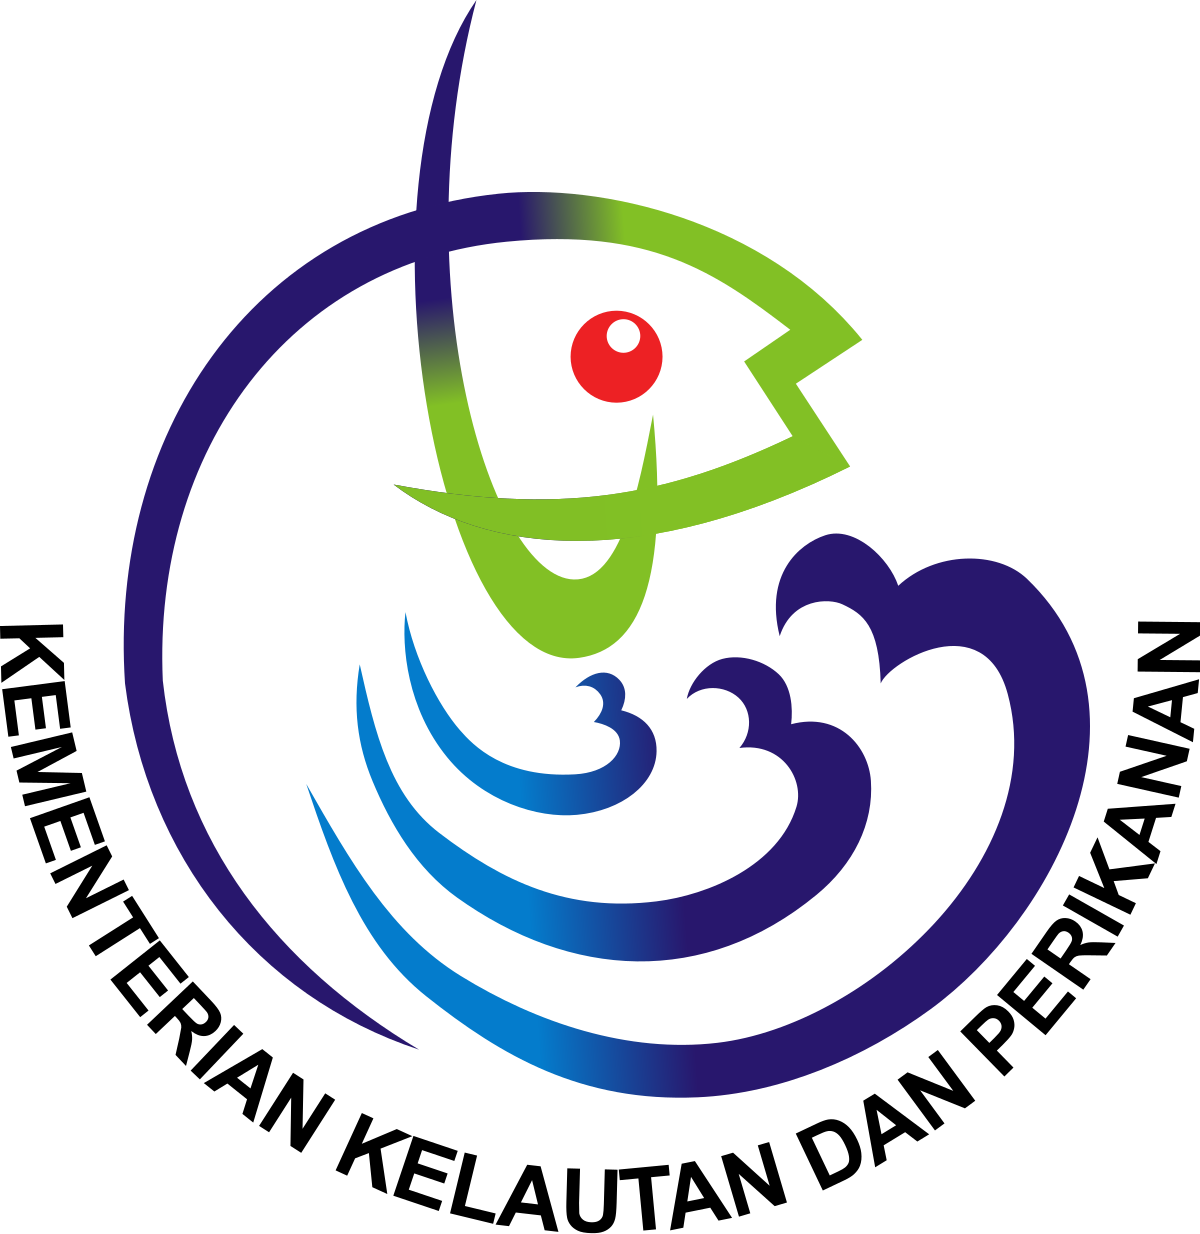 mmaf logo